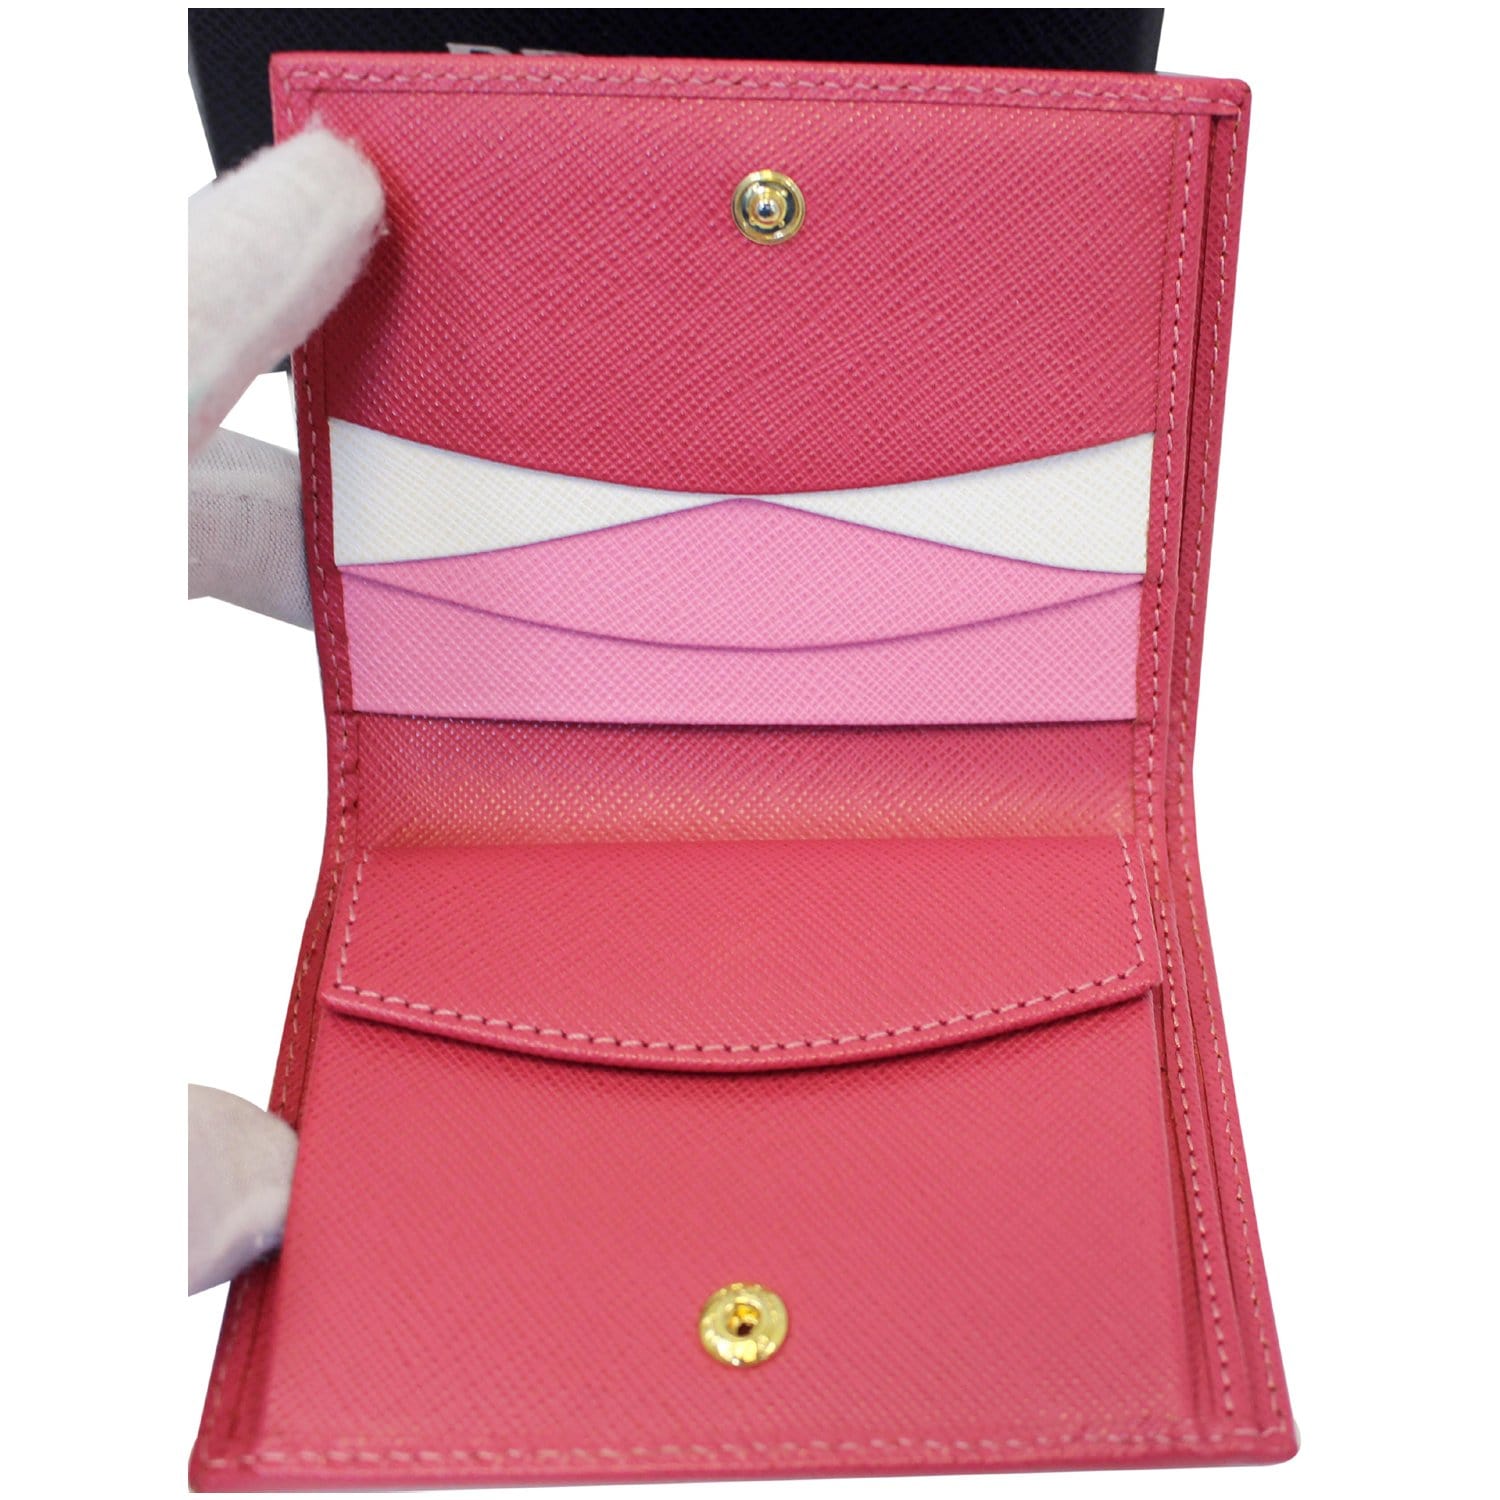 PRADA Red Pink Nested Saffiano Leather Envelope Portfolio Clutch Wallet NIB